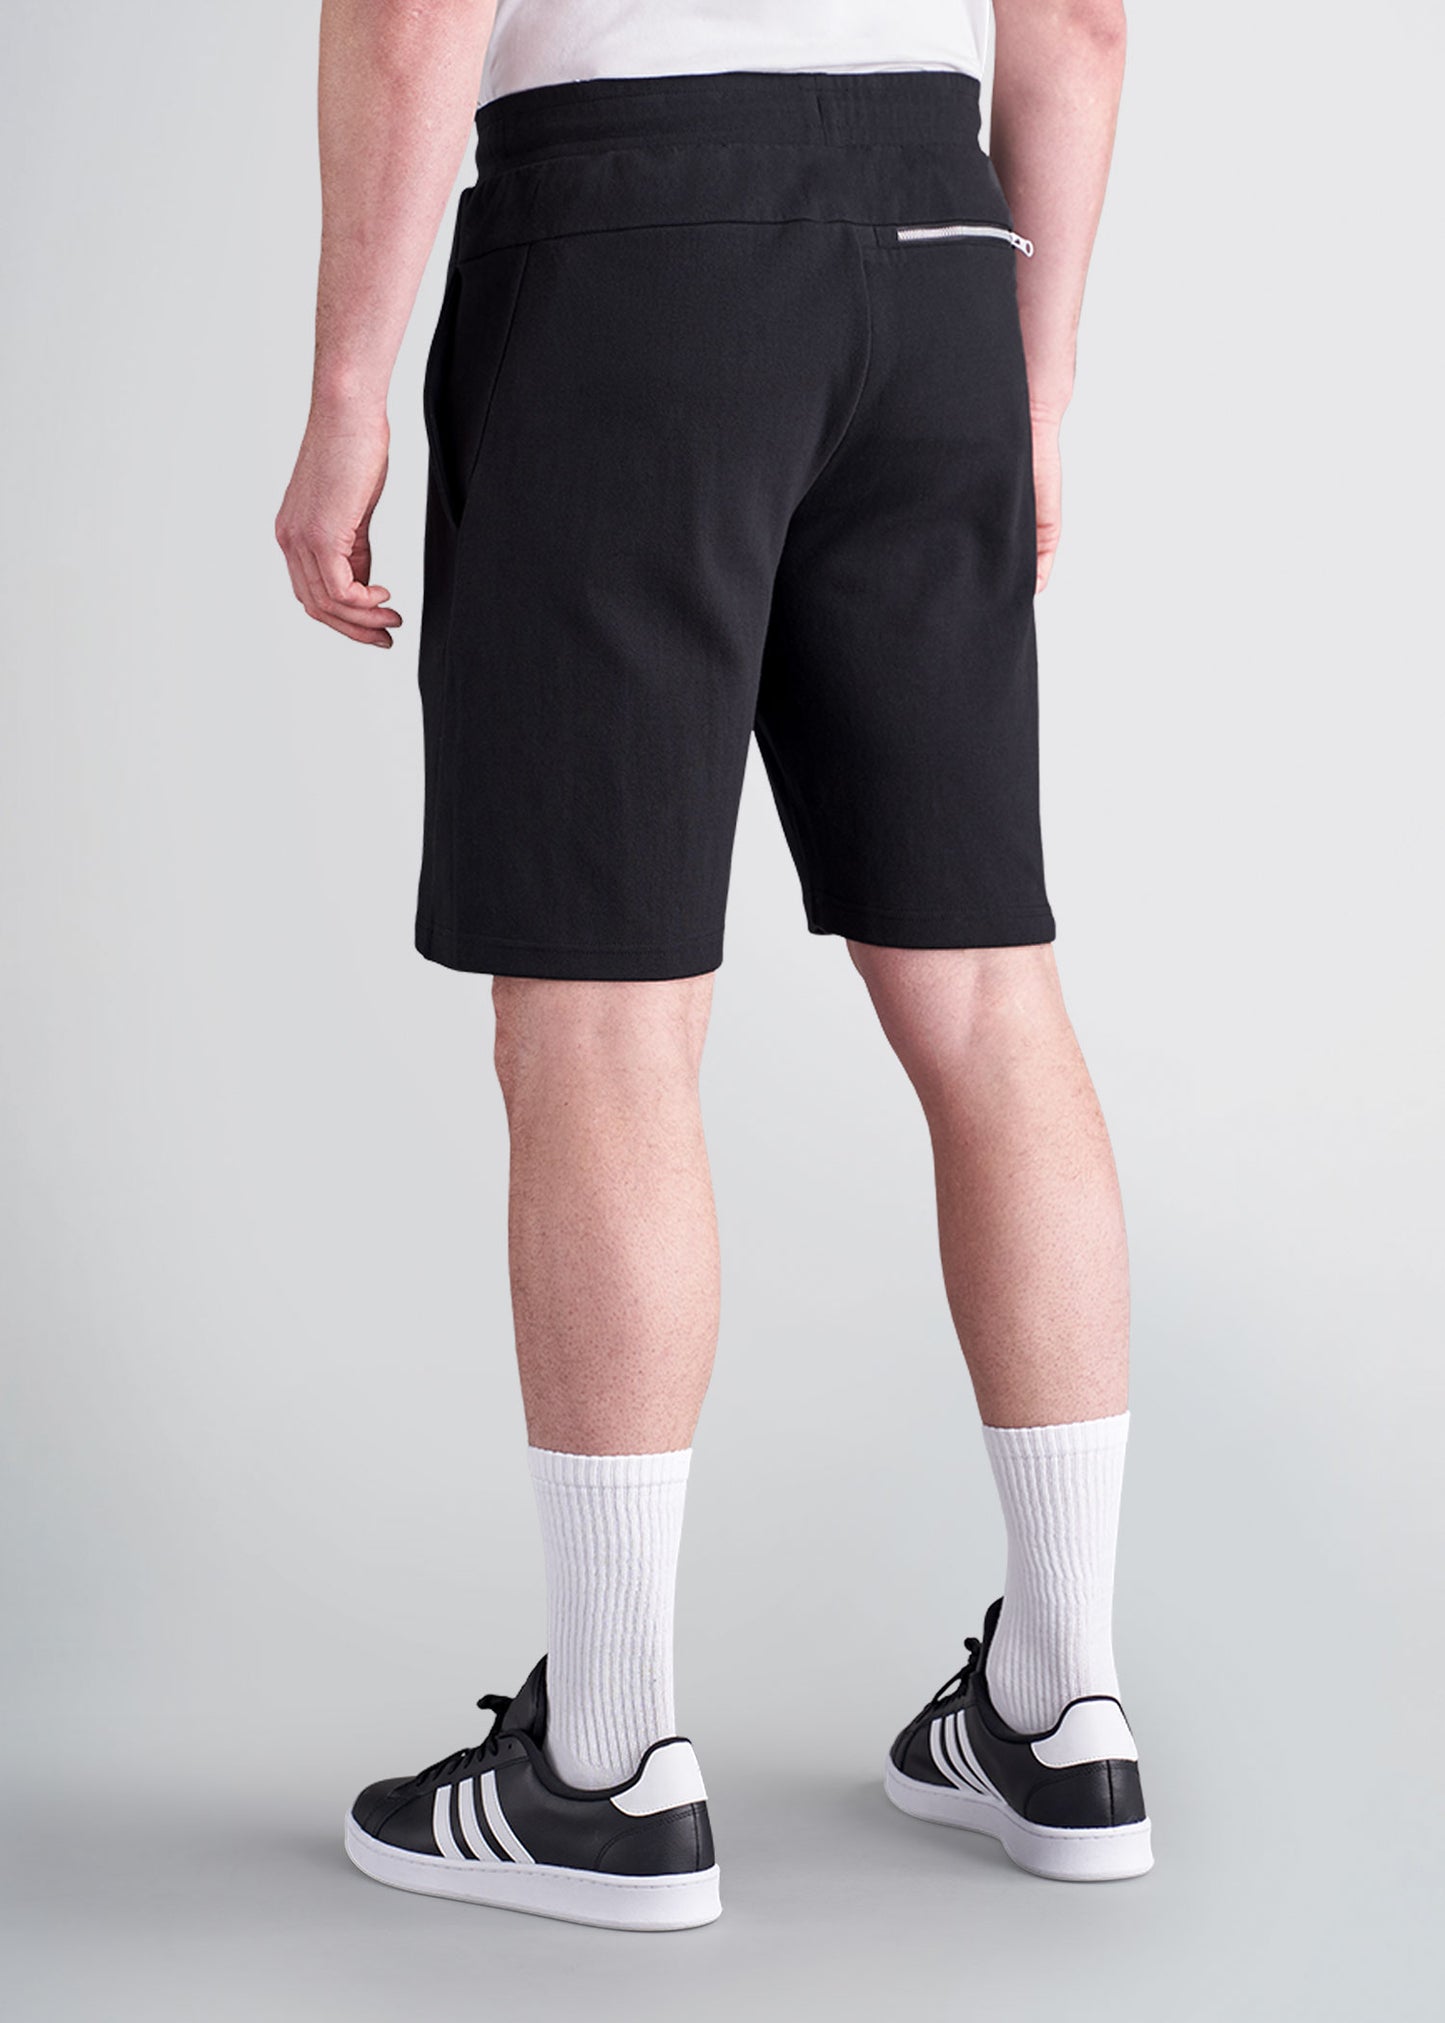 american-tall-mens-knit-athletic-shorts-black-back